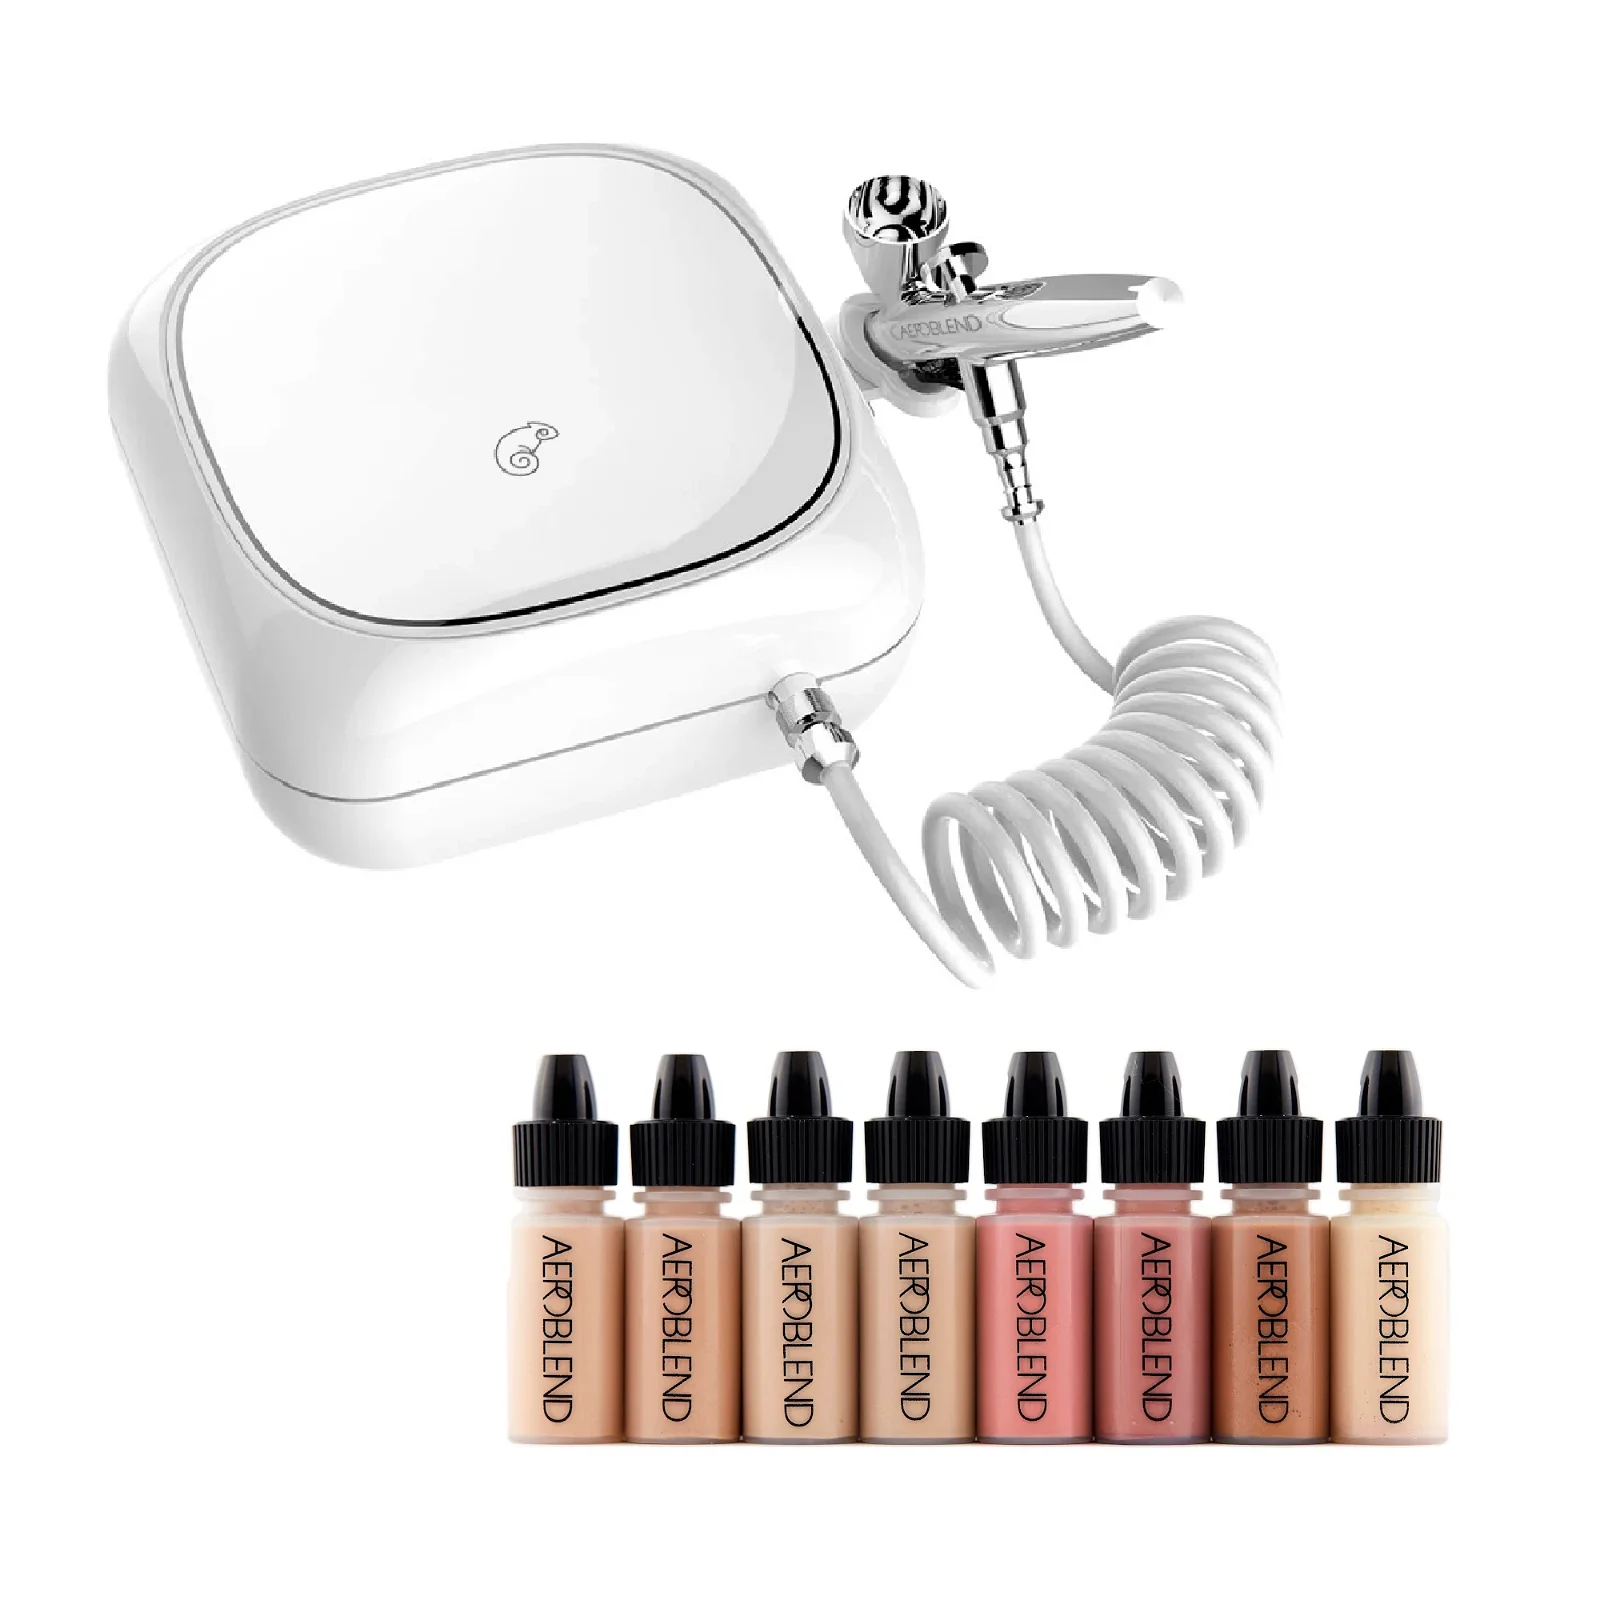 Image of New! Personal Airbrush Makeup Starter Kit